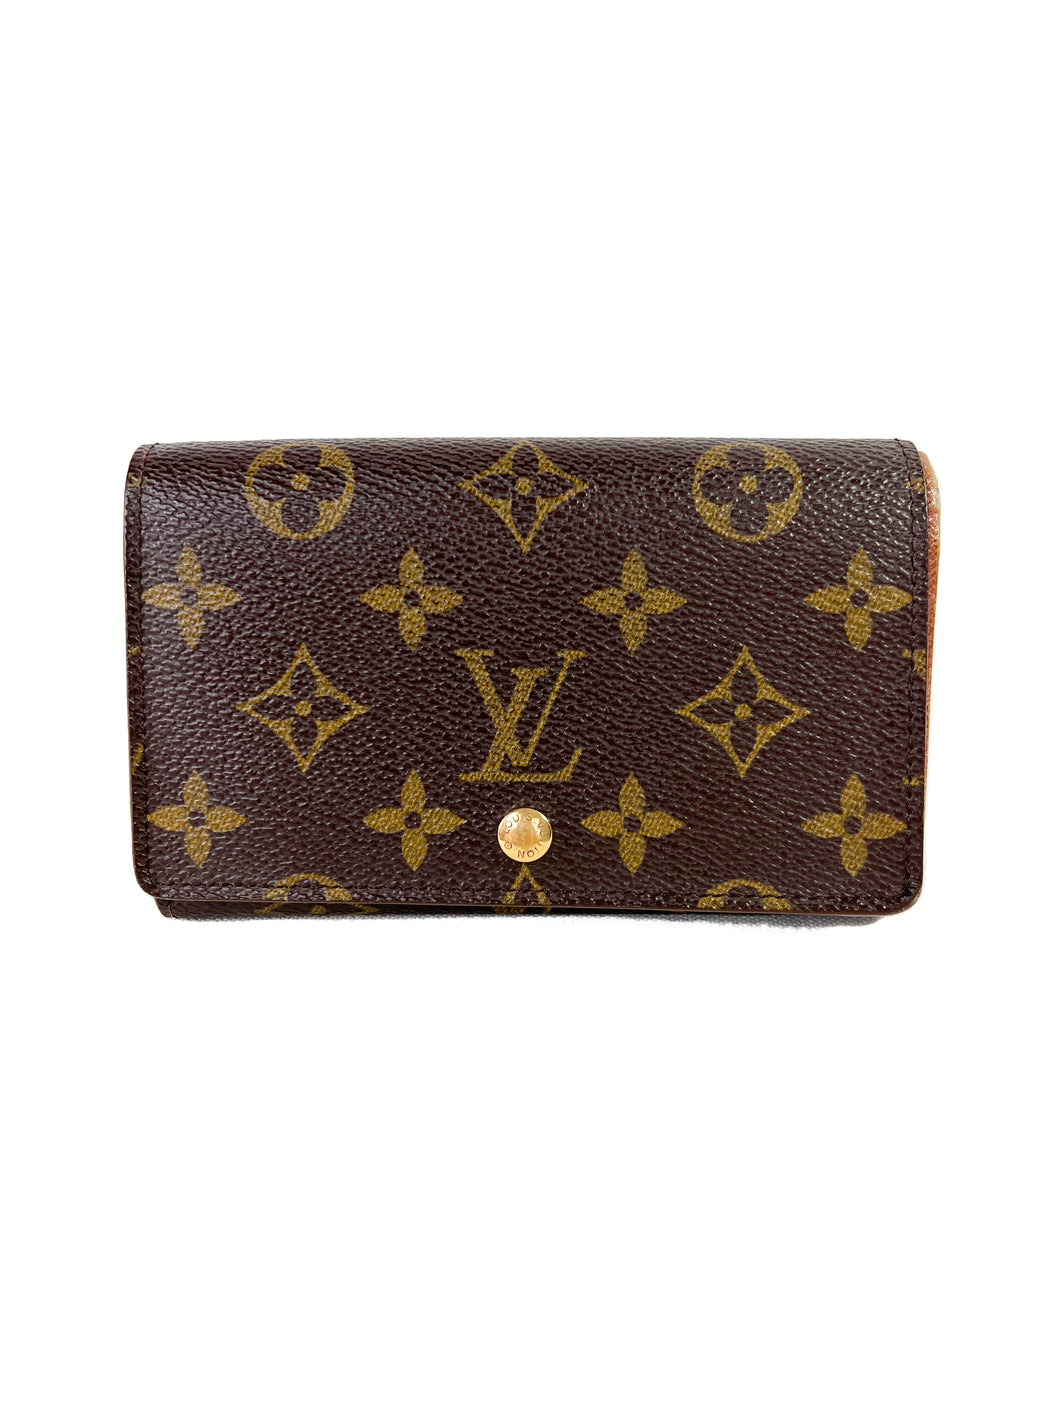 Louis Vuitton monogram vintage 1995 wallet